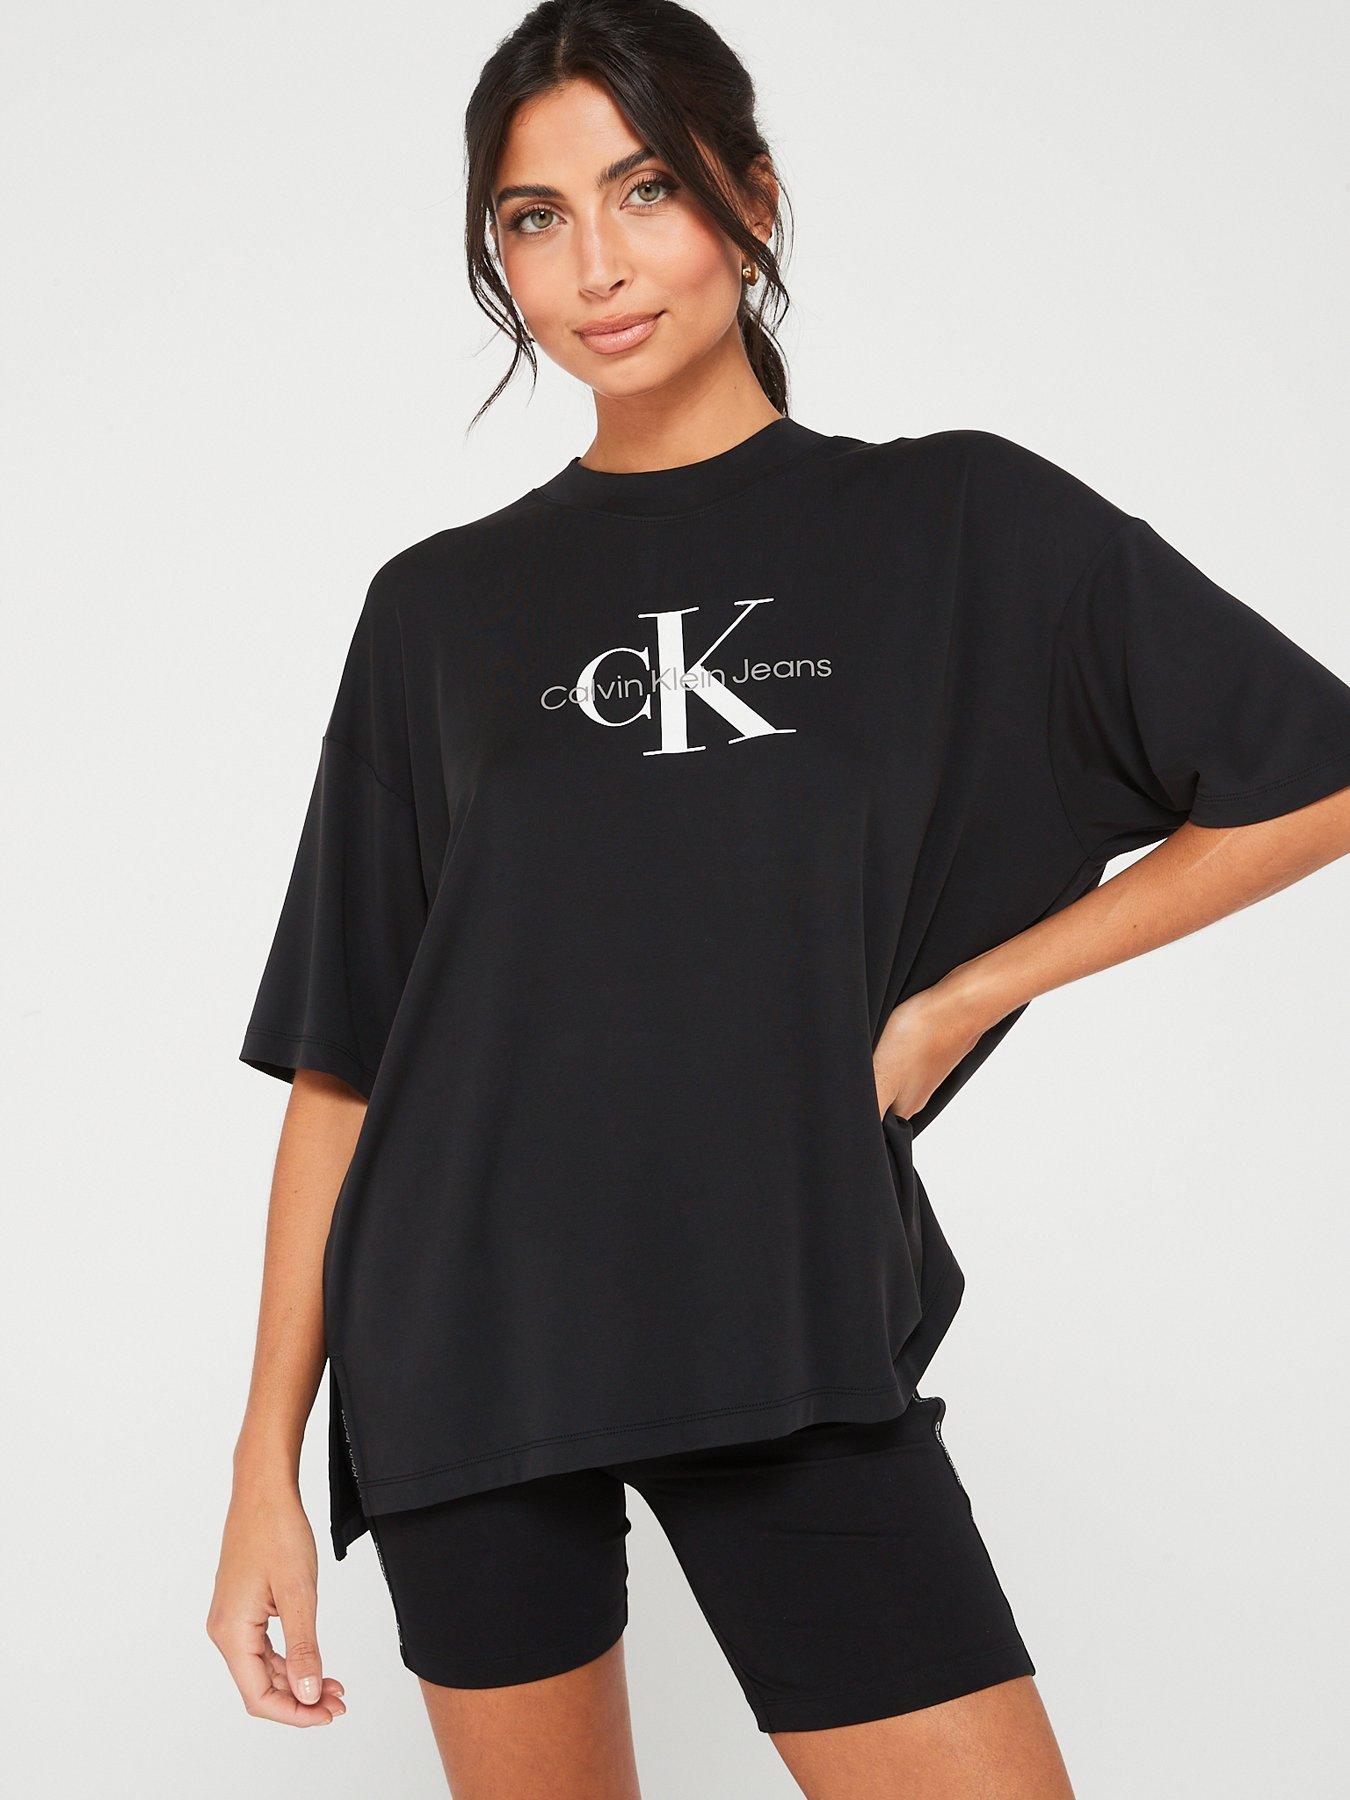 Calvin Klein Girls Yellow & Black T-shirt – The Petite Couture